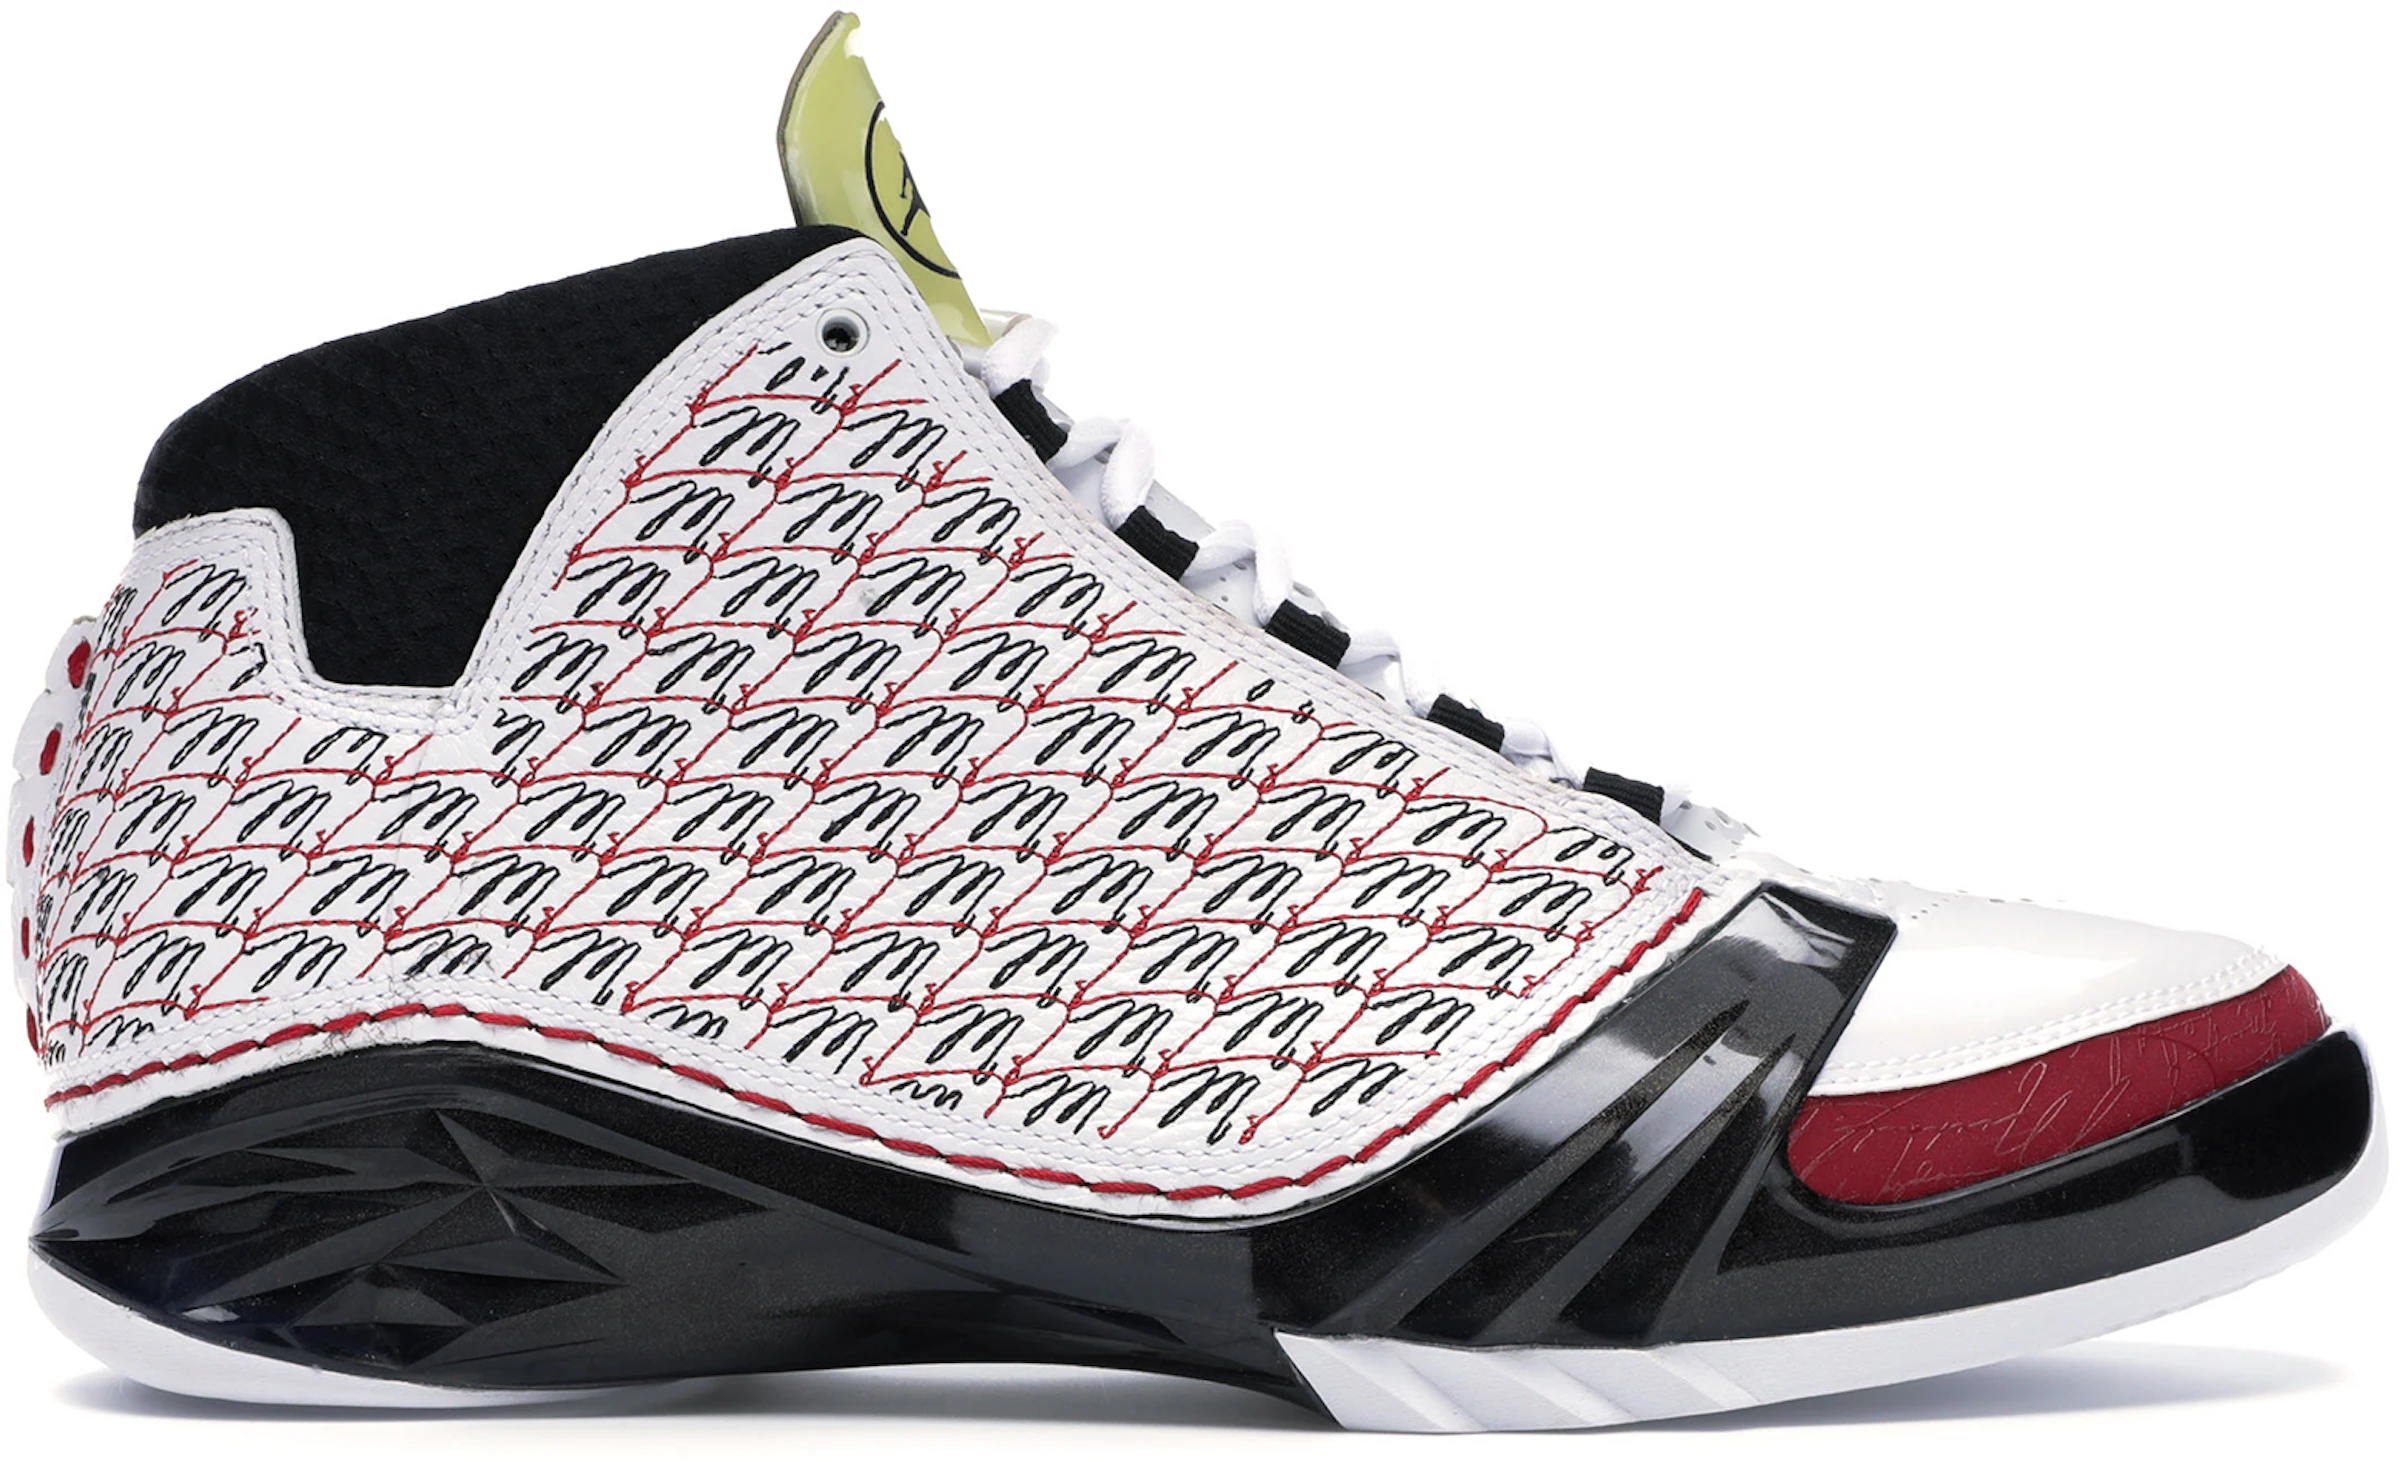 Circunstancias imprevistas Vegetales carbón Buy Air Jordan 23 Shoes & New Sneakers - StockX